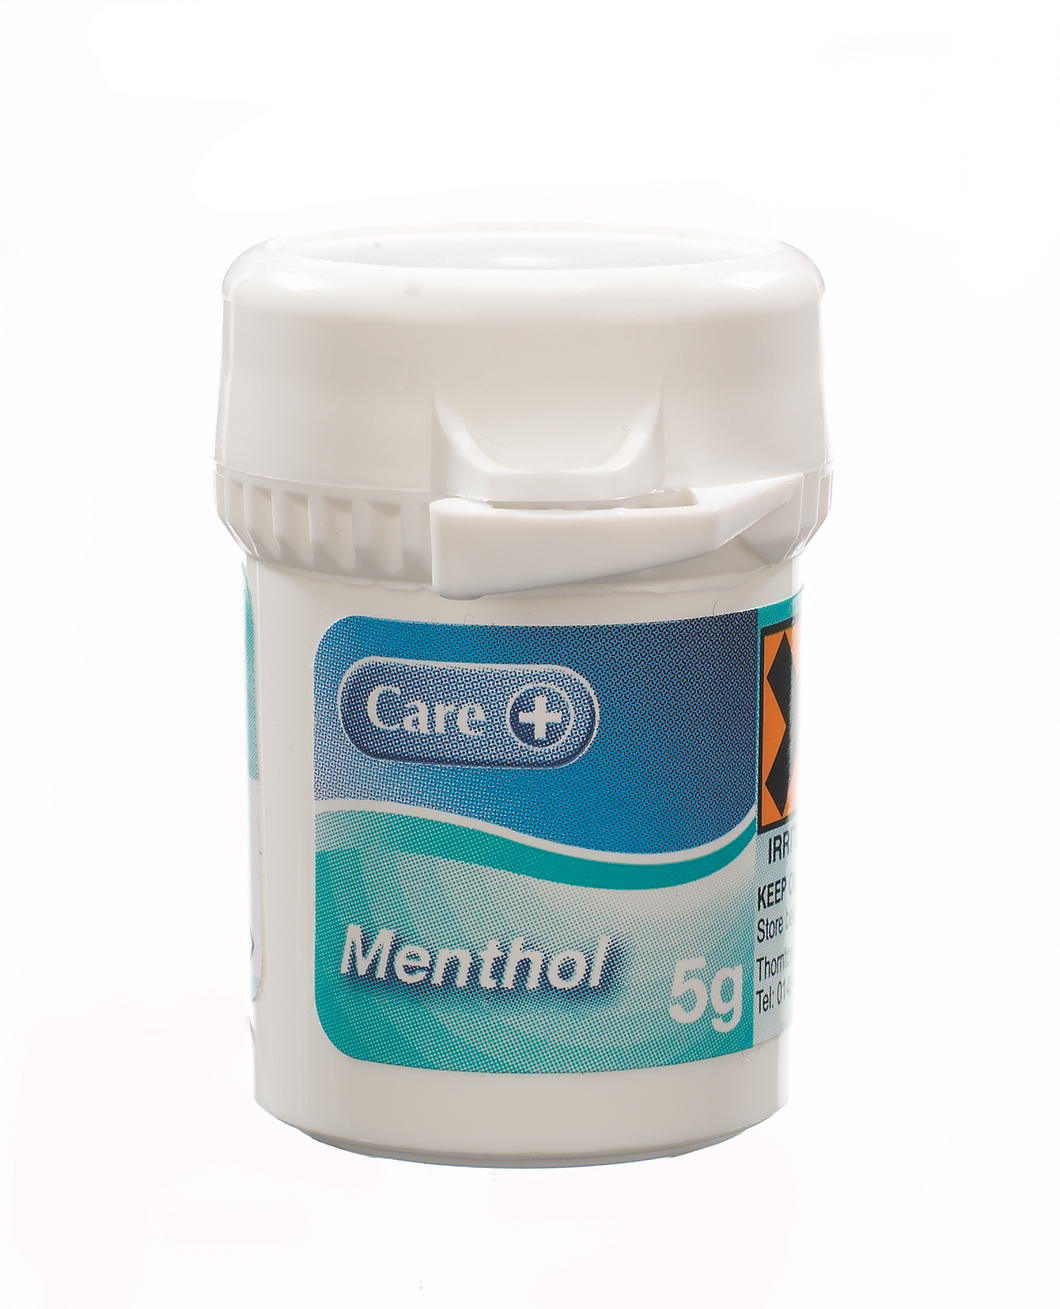 Care Menthol BP 5g